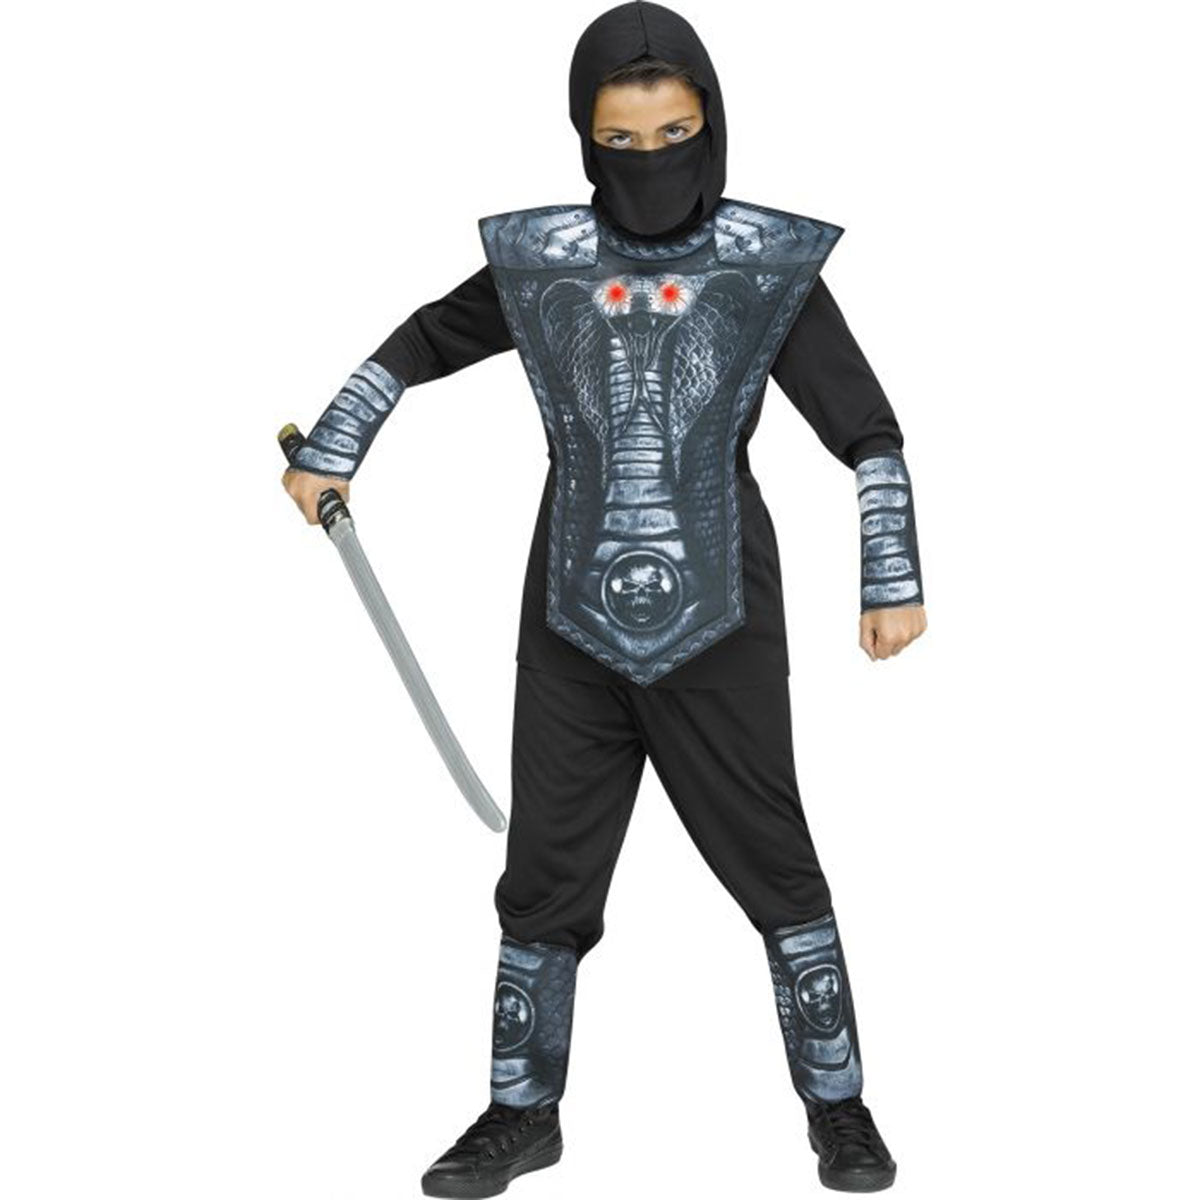 FUN WORLD Costumes Sylver Cobra Ninja Costume for Kids